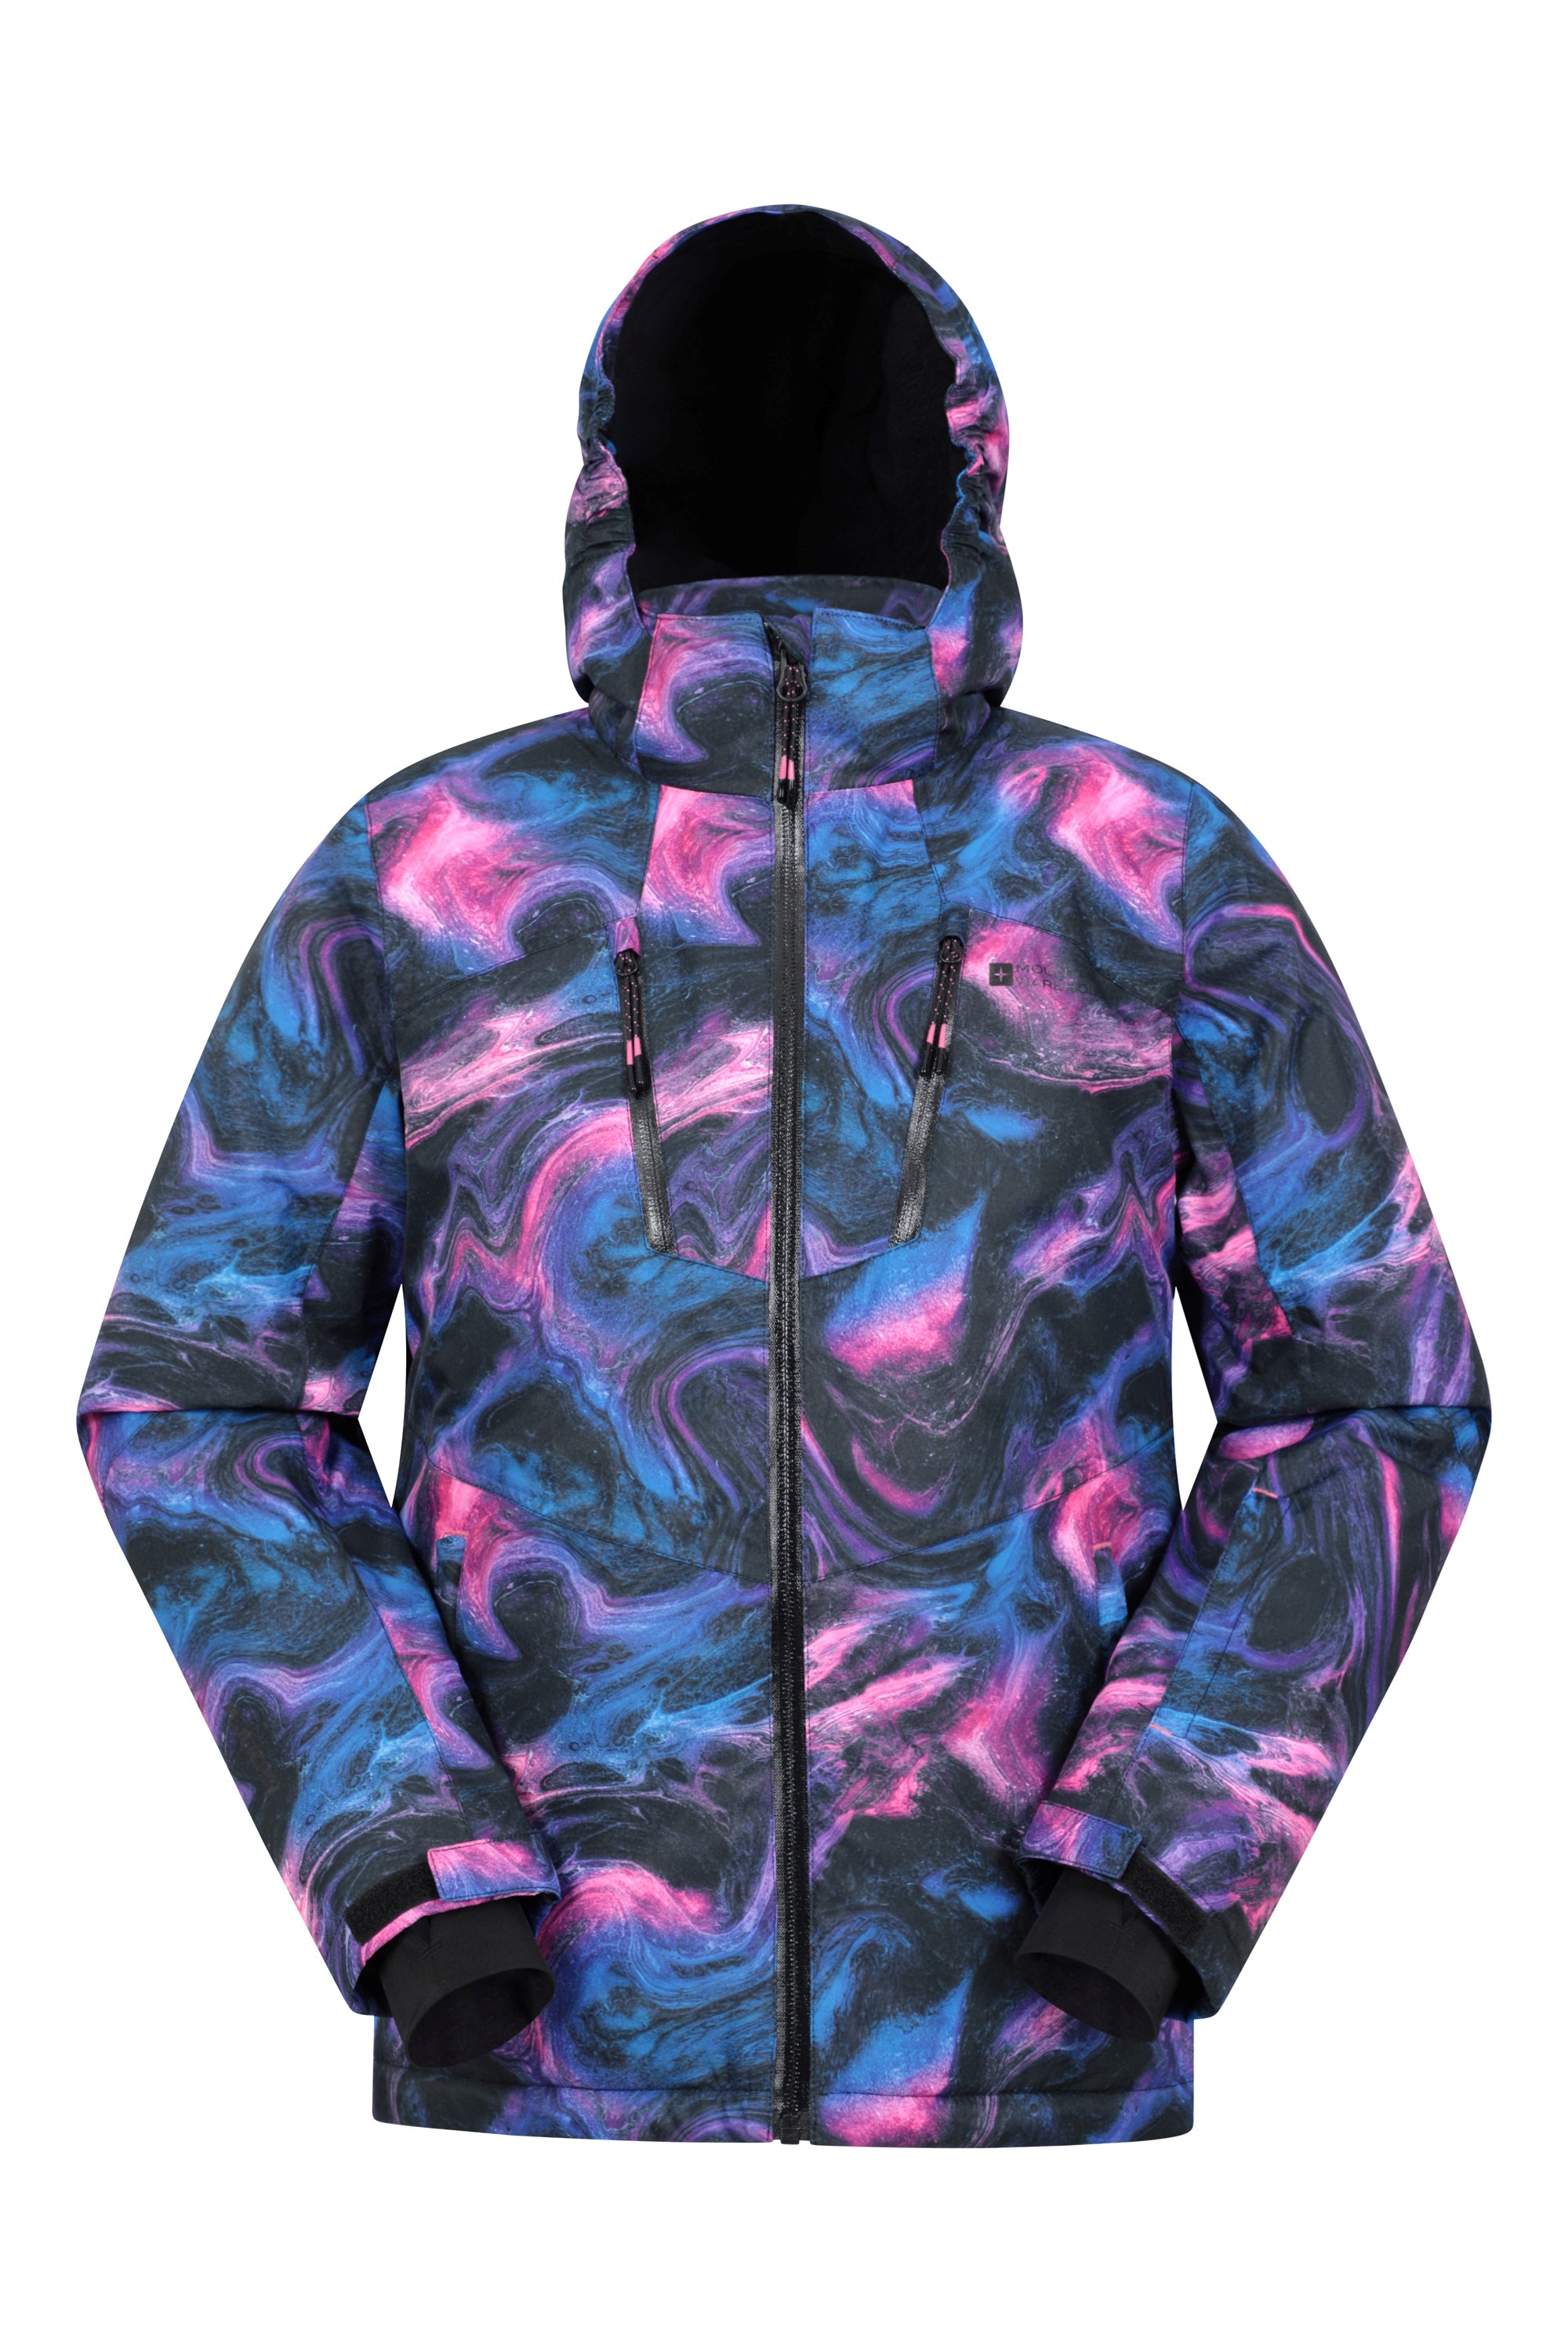 new Crivit Jacket Womens SIZE 12 dark Pink Full Zip Parka Coat Ski Hooded